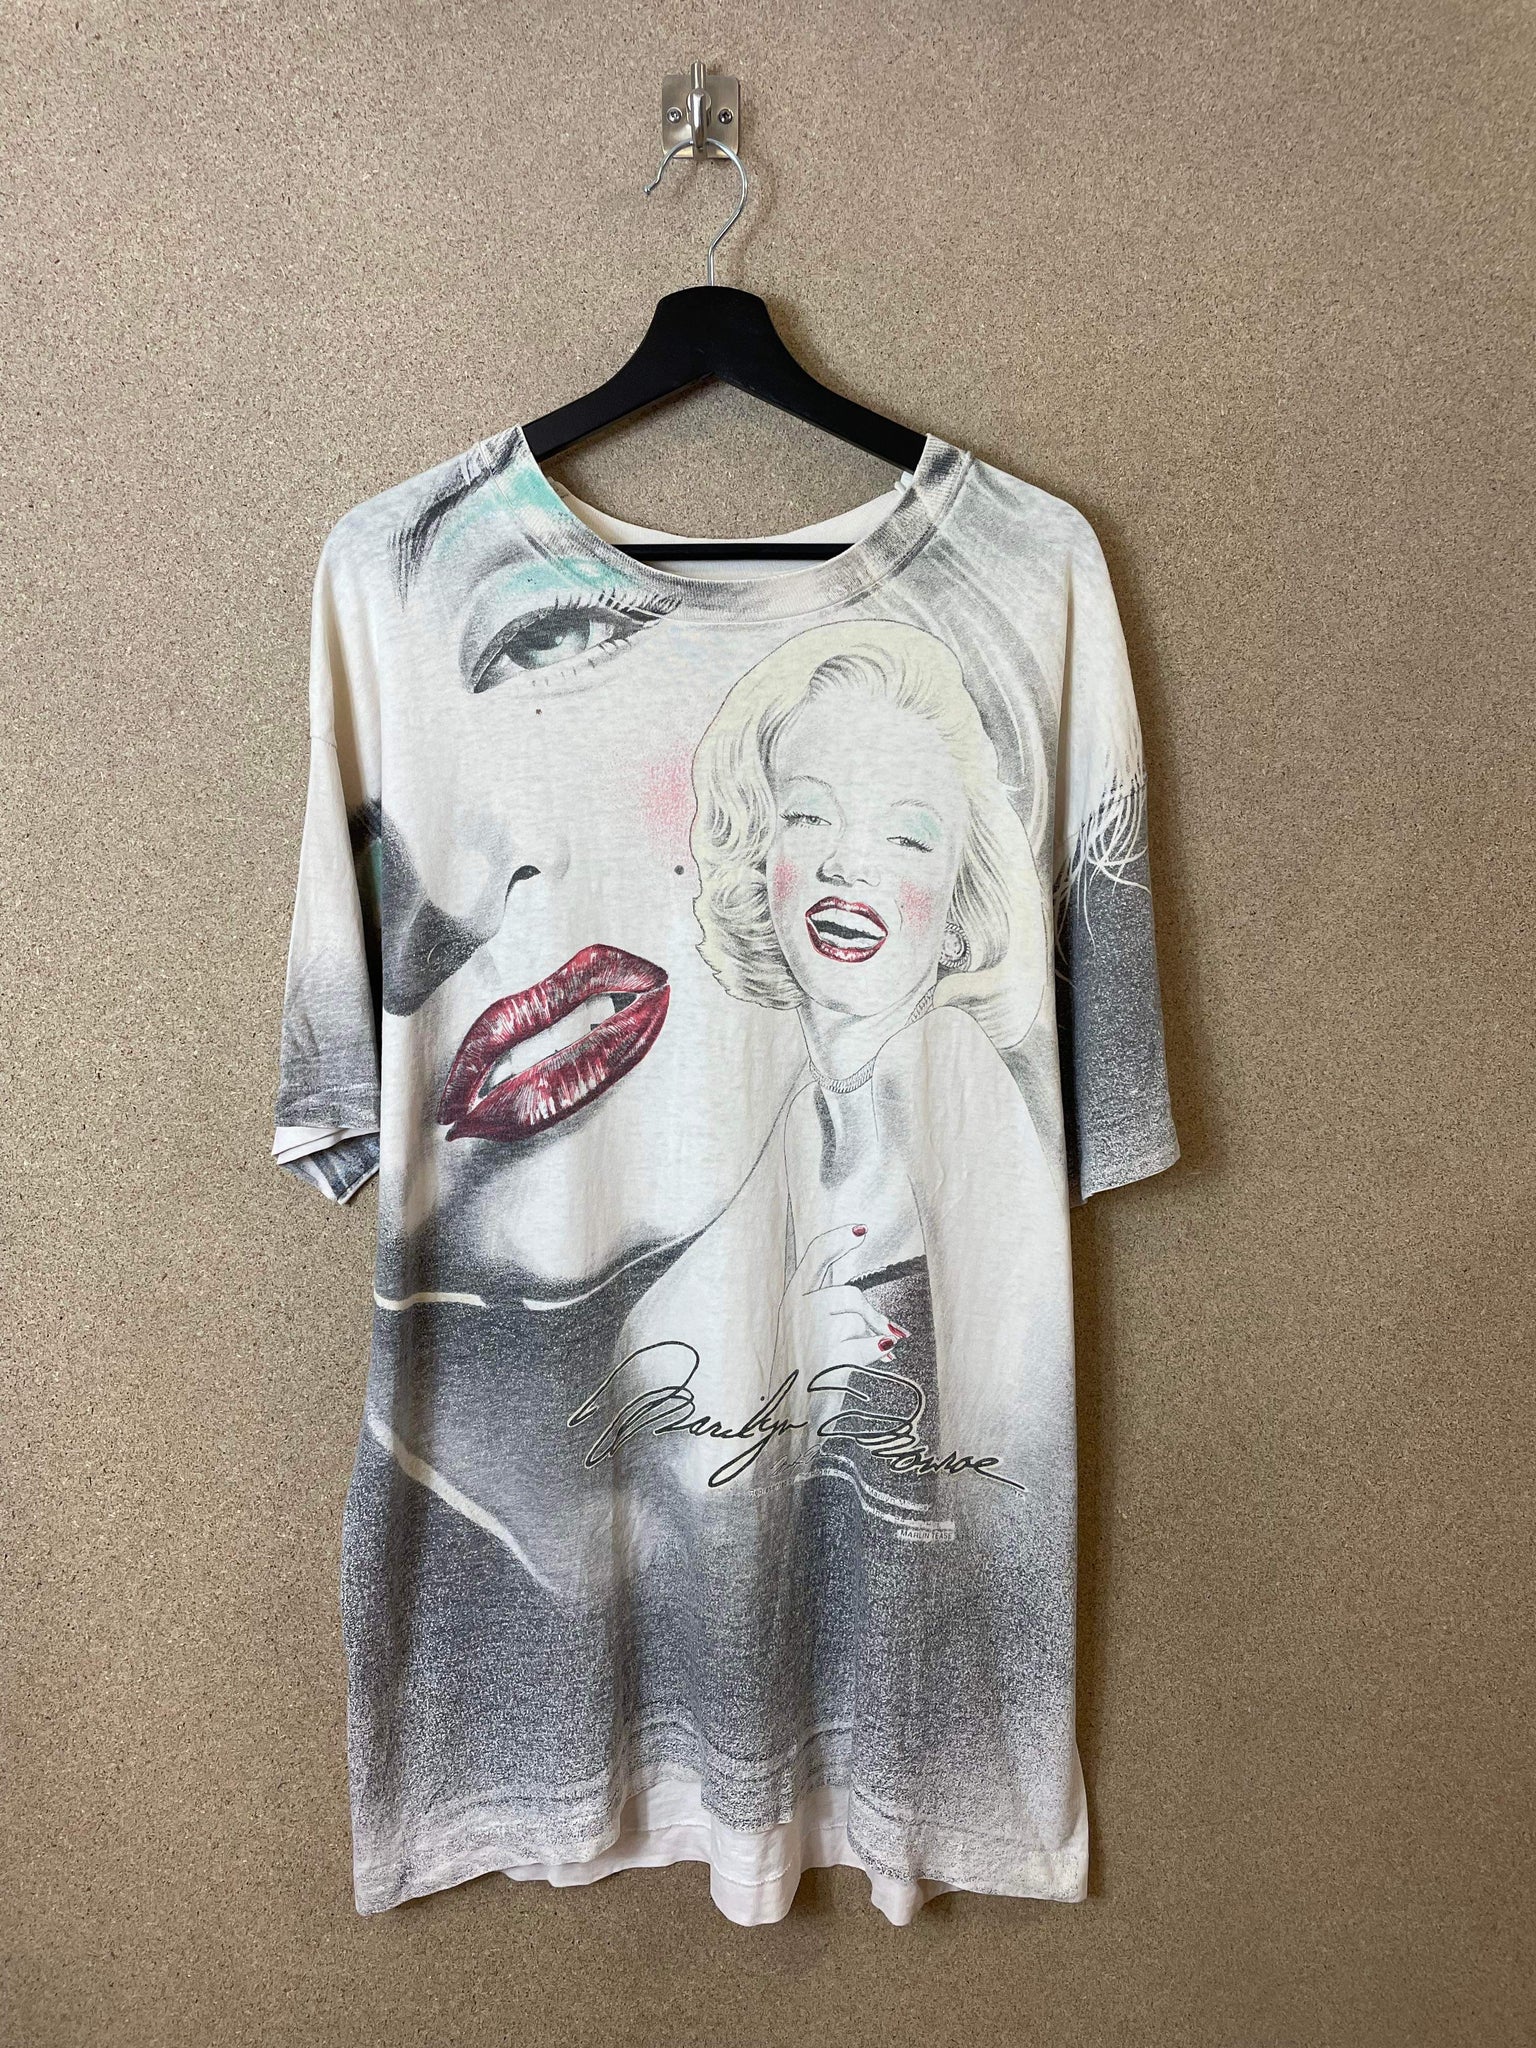 Vintage Marilyn Monroe 90s All Over Print Tee - XL